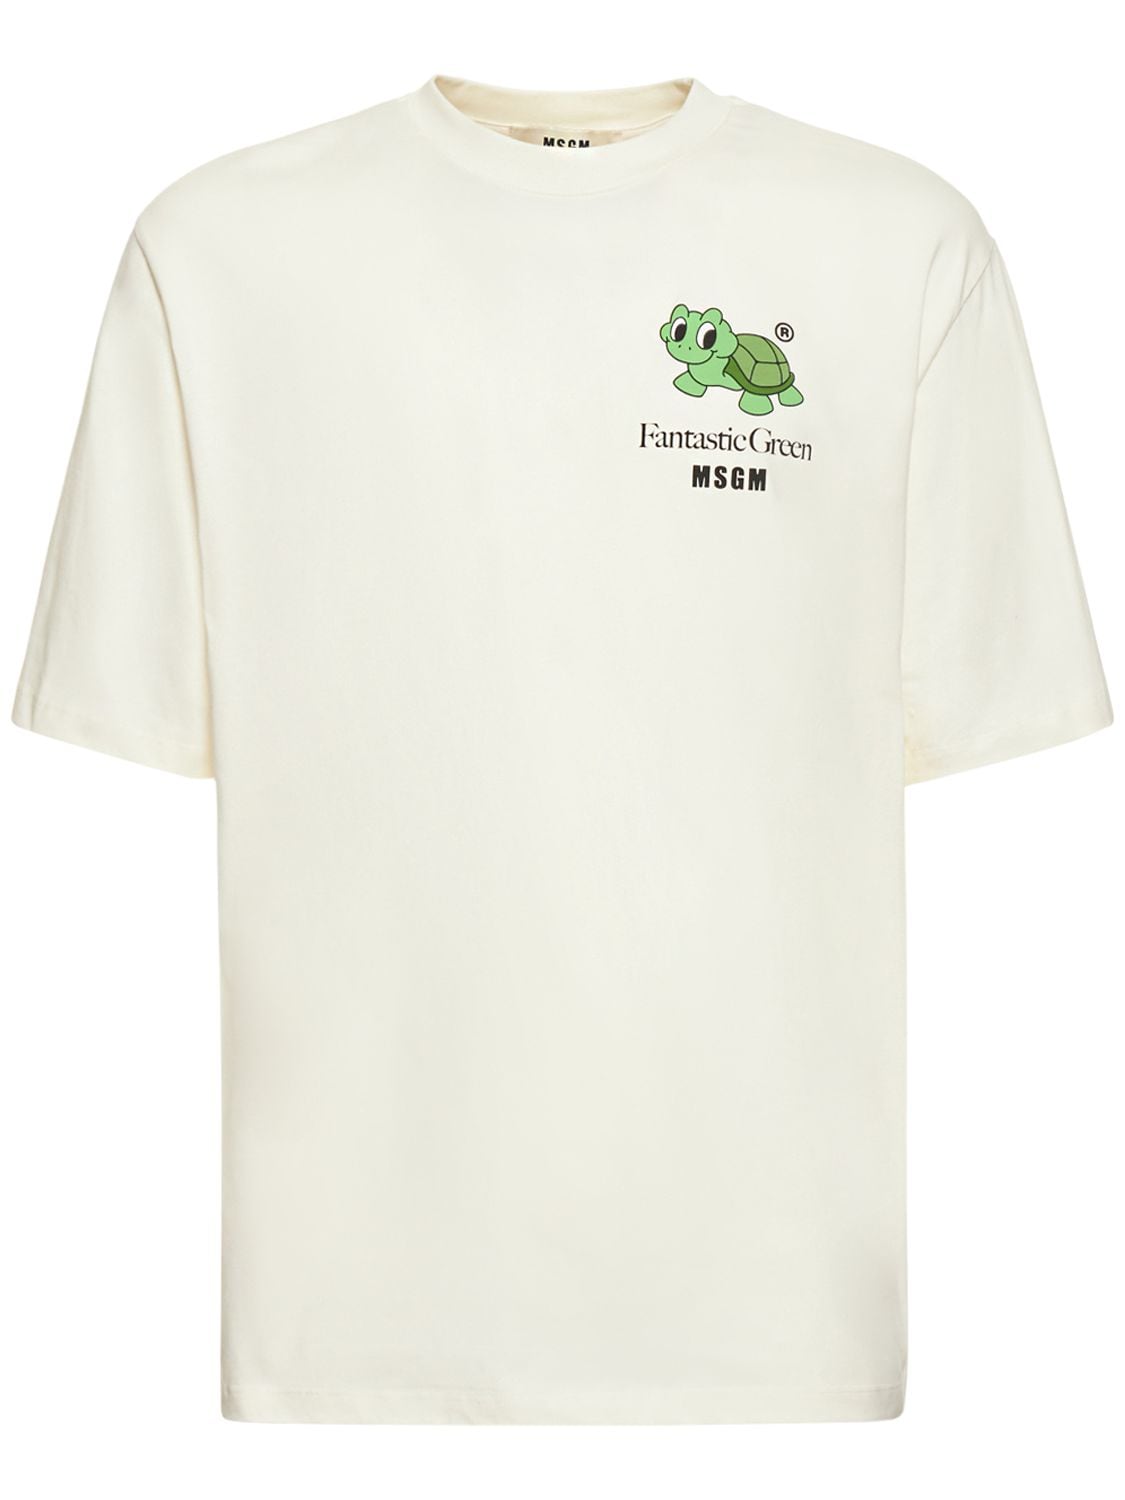 MSGM FANTASTIC GREEN有机棉T恤 